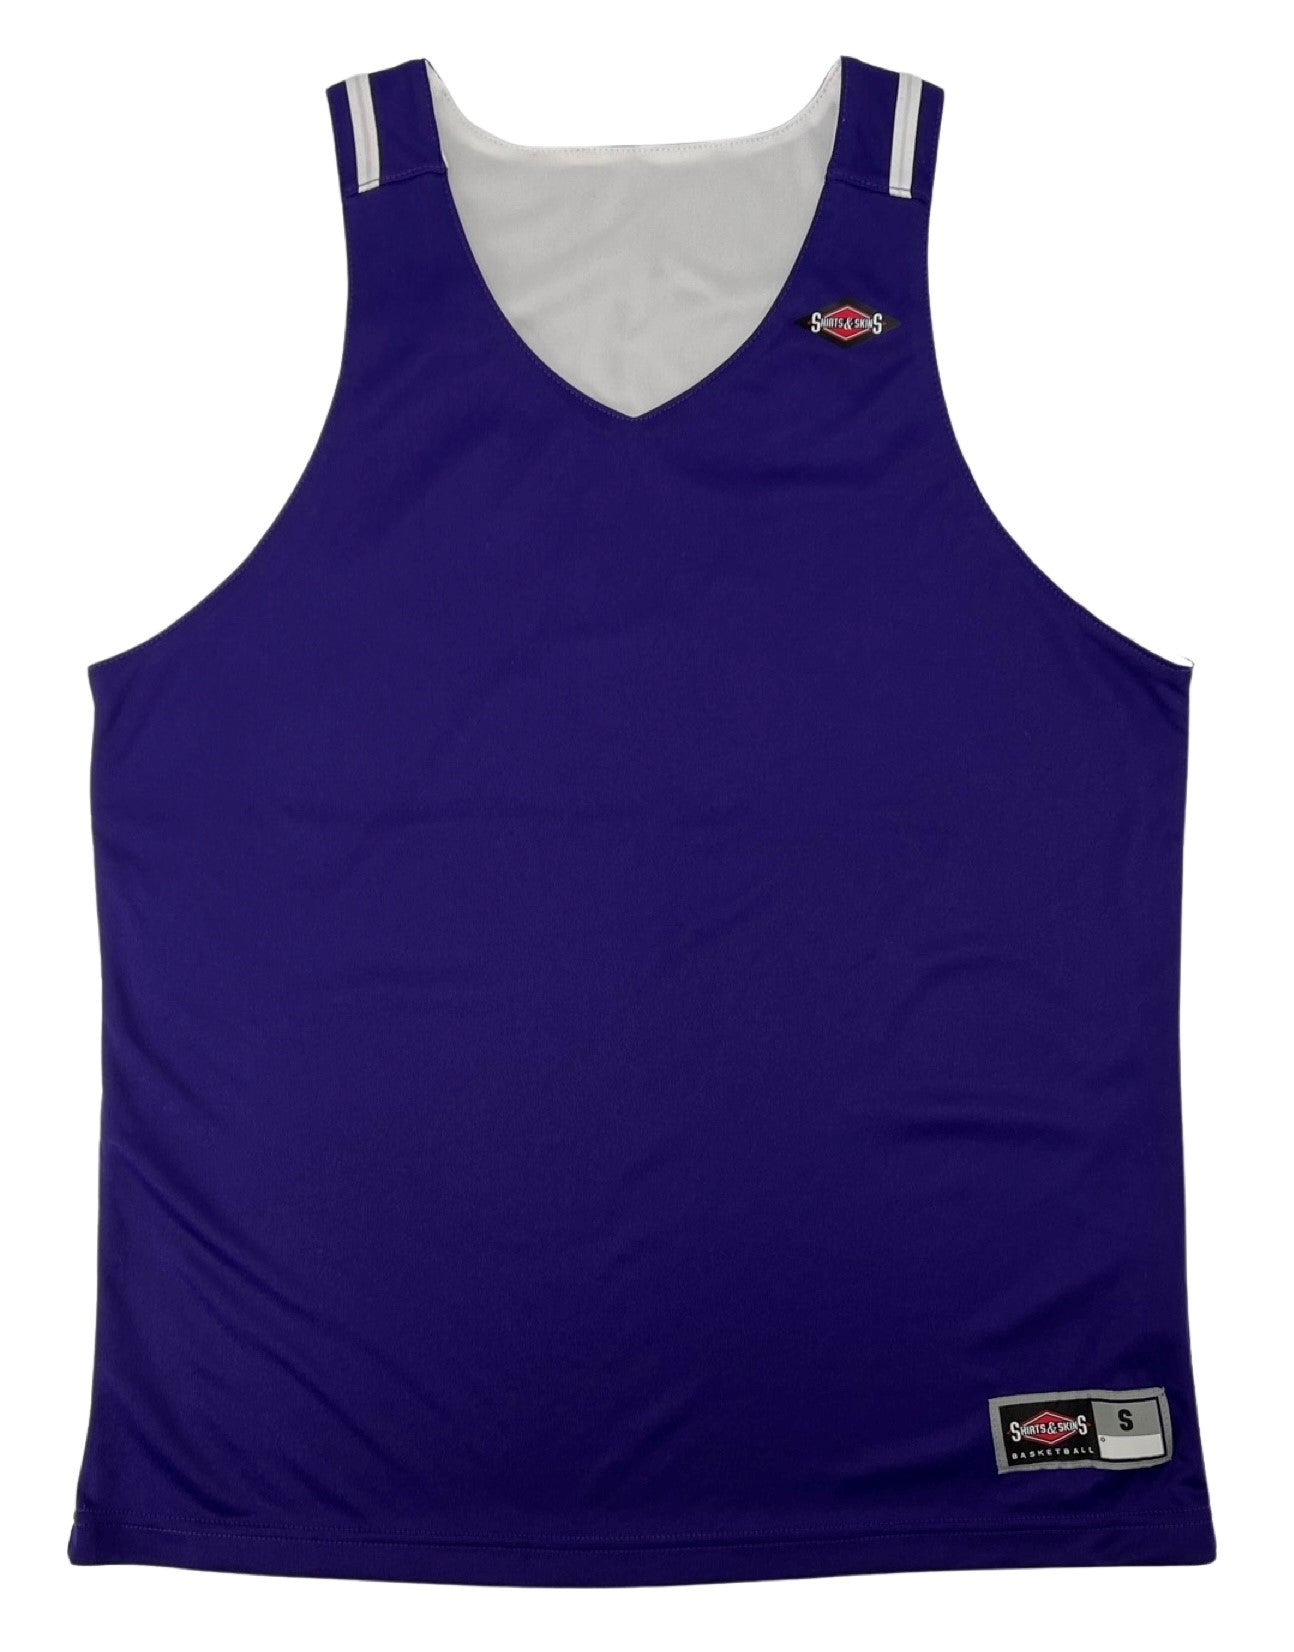 Shirts & Skins Purple/White All-Star Reversible Basketball Jersey